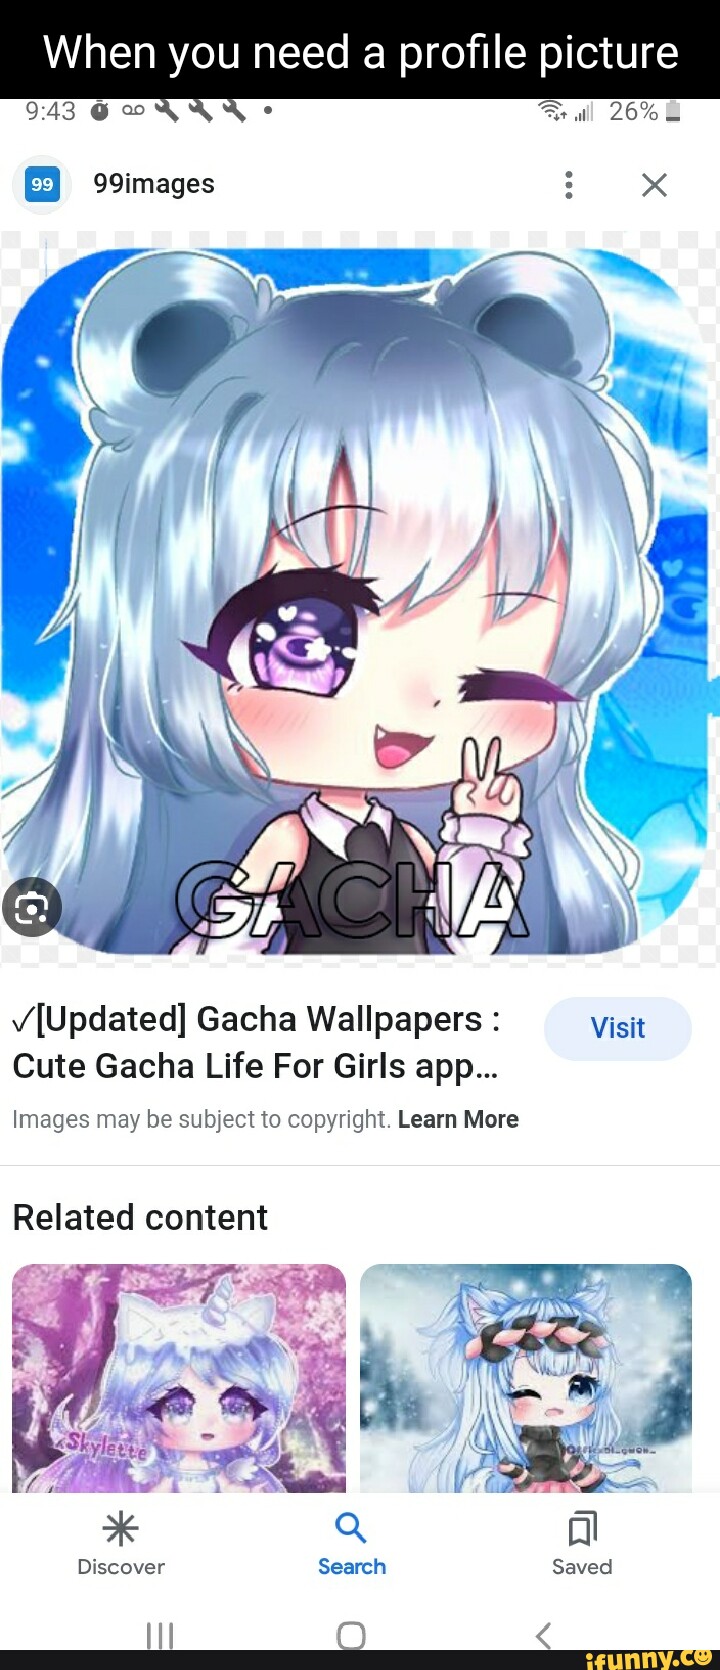 Anime Gacha Life Wallpapers  Wallpaper Cave  Милые рисунки  Мультипликационные рисунки Рисунки